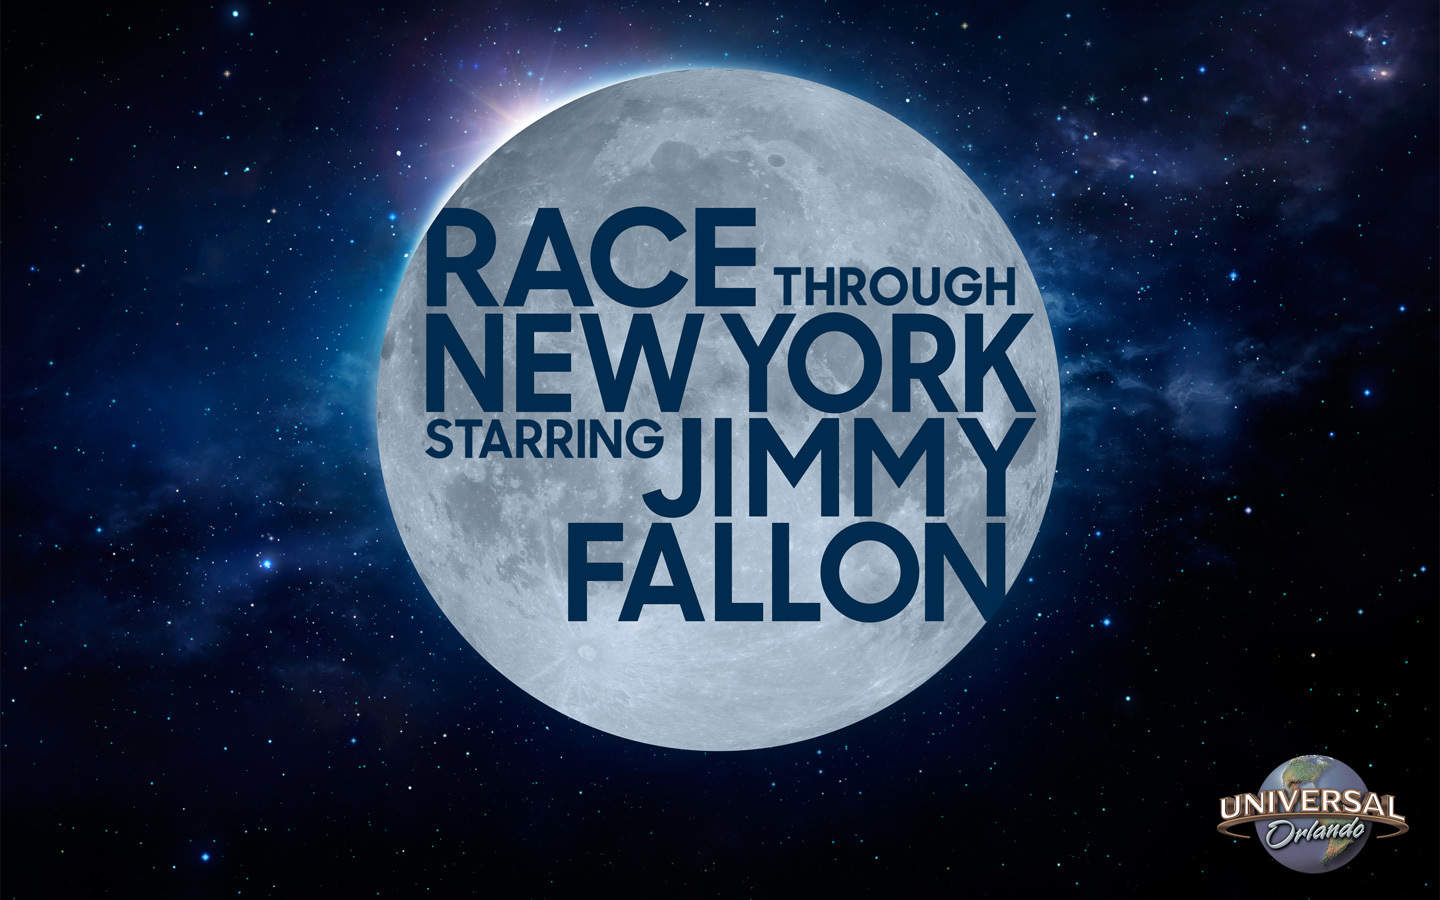 Jimmy Fallon califica 'Race Through New York Starring Jimmy Fallon' como "una locura"